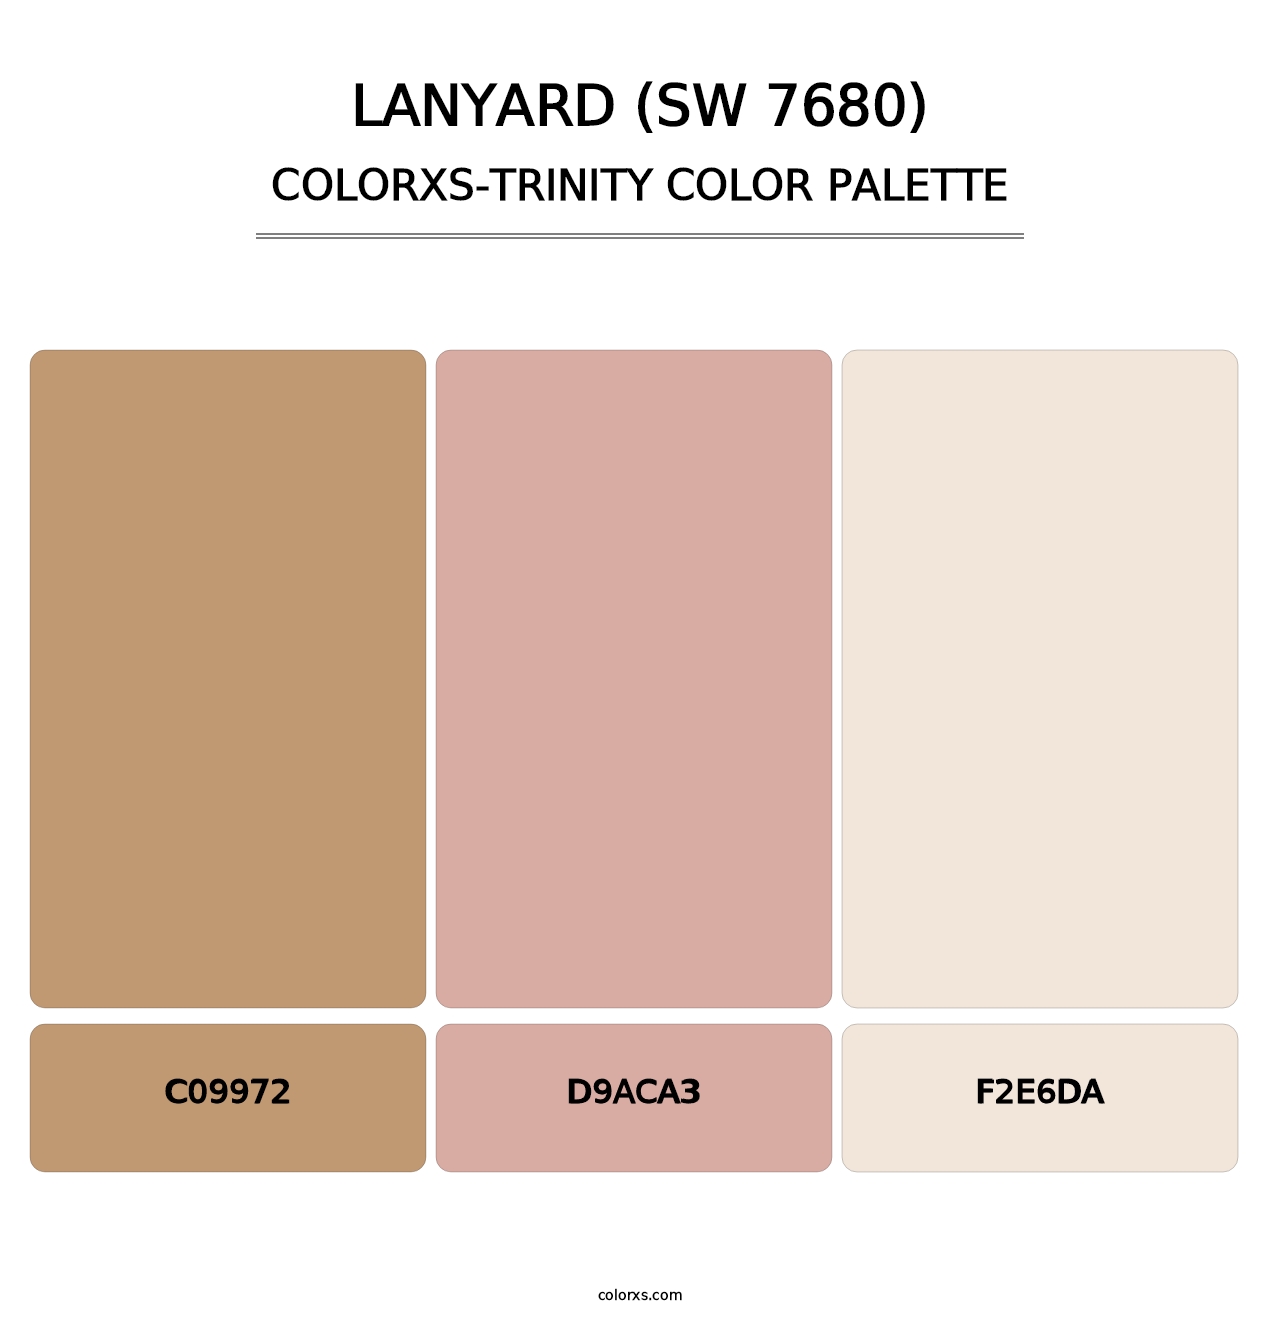 Lanyard (SW 7680) - Colorxs Trinity Palette